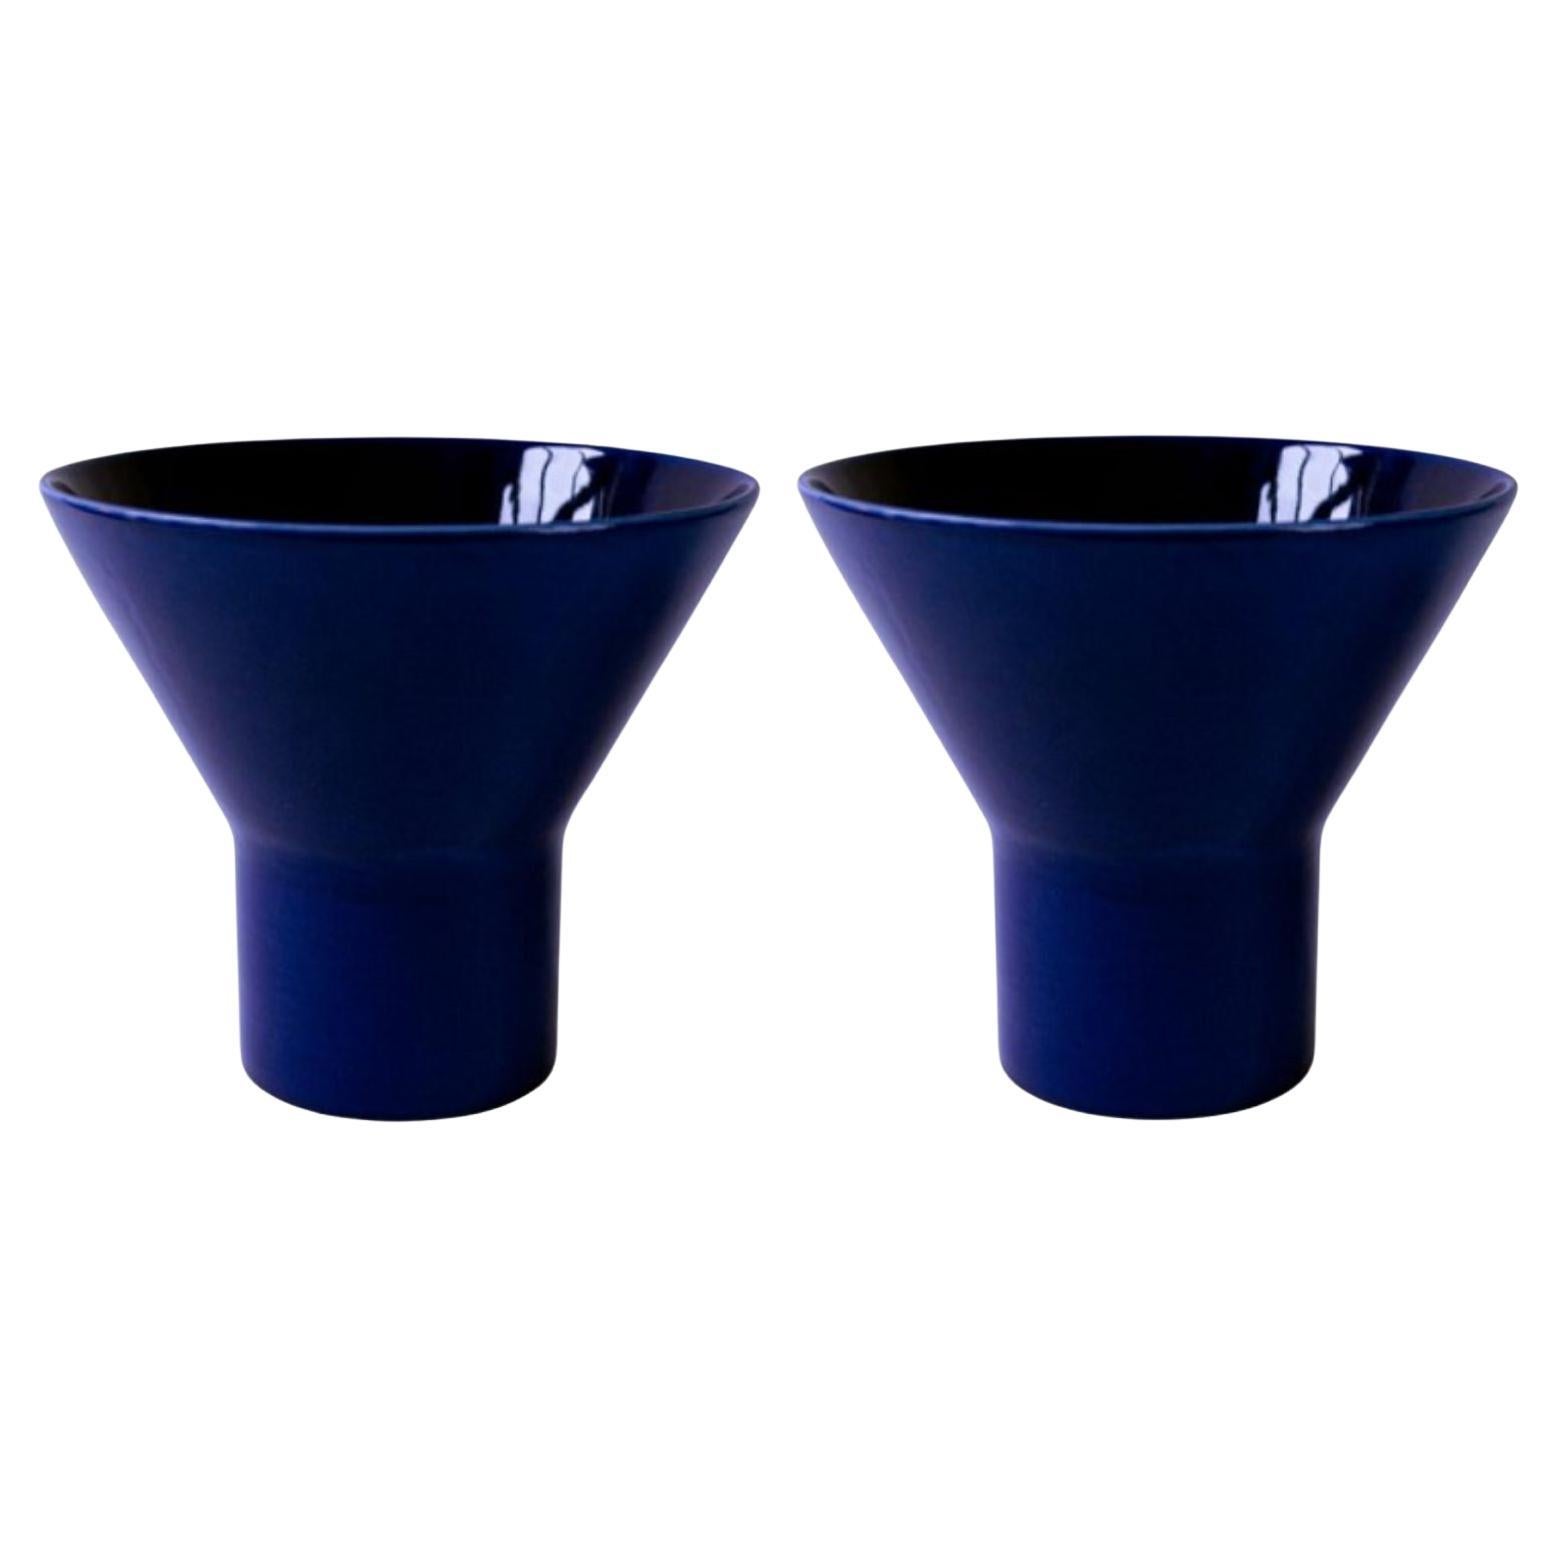 Set of 2 Large Blue Ceramic KYO Vases by Mazo Design